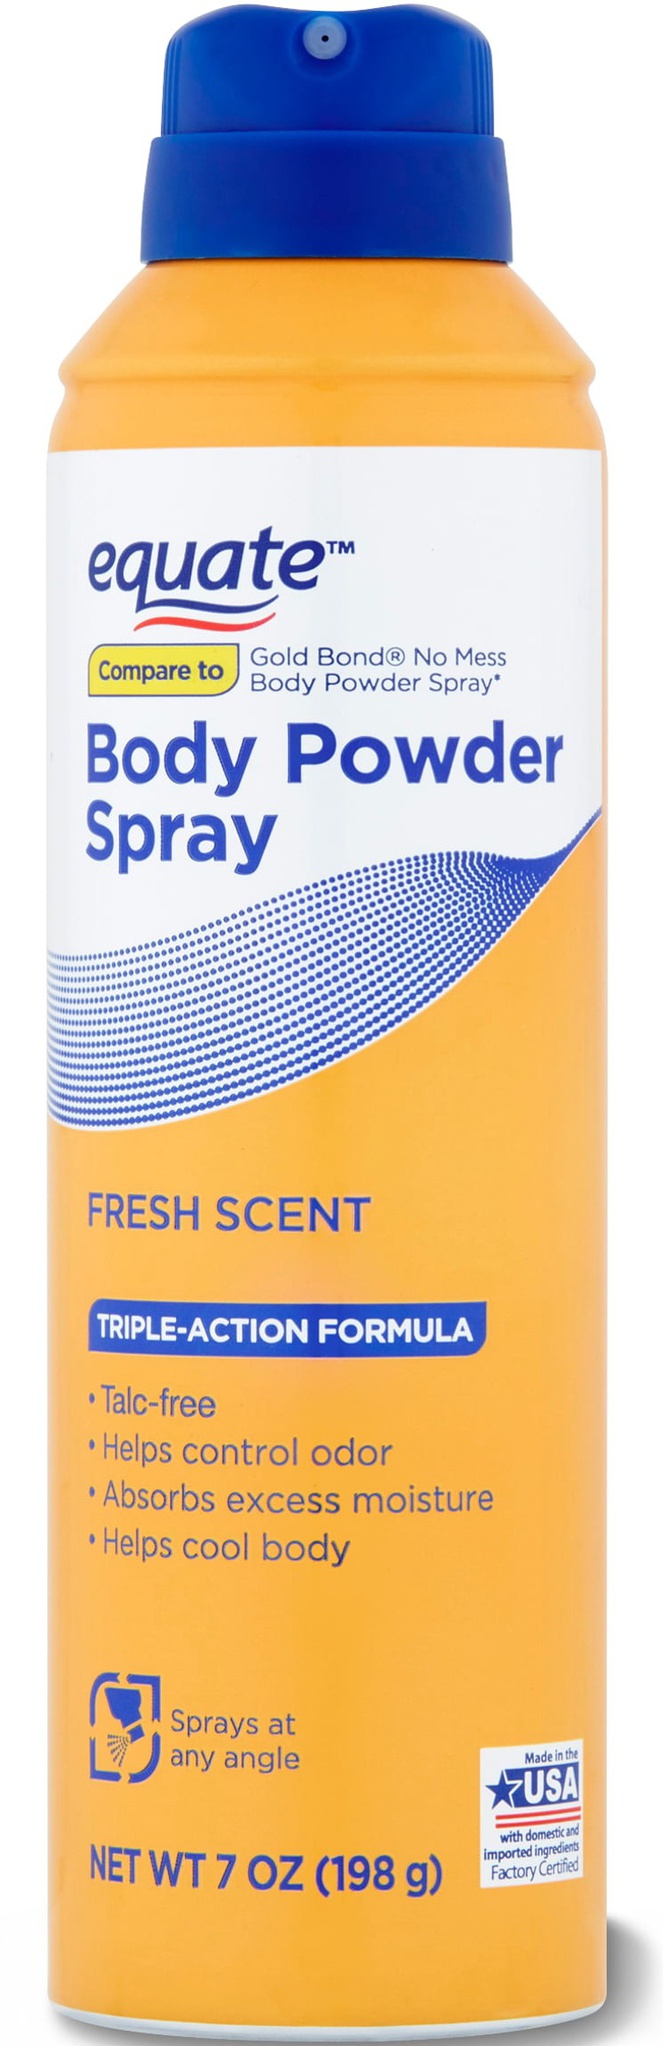 Equate Body Powder Spray